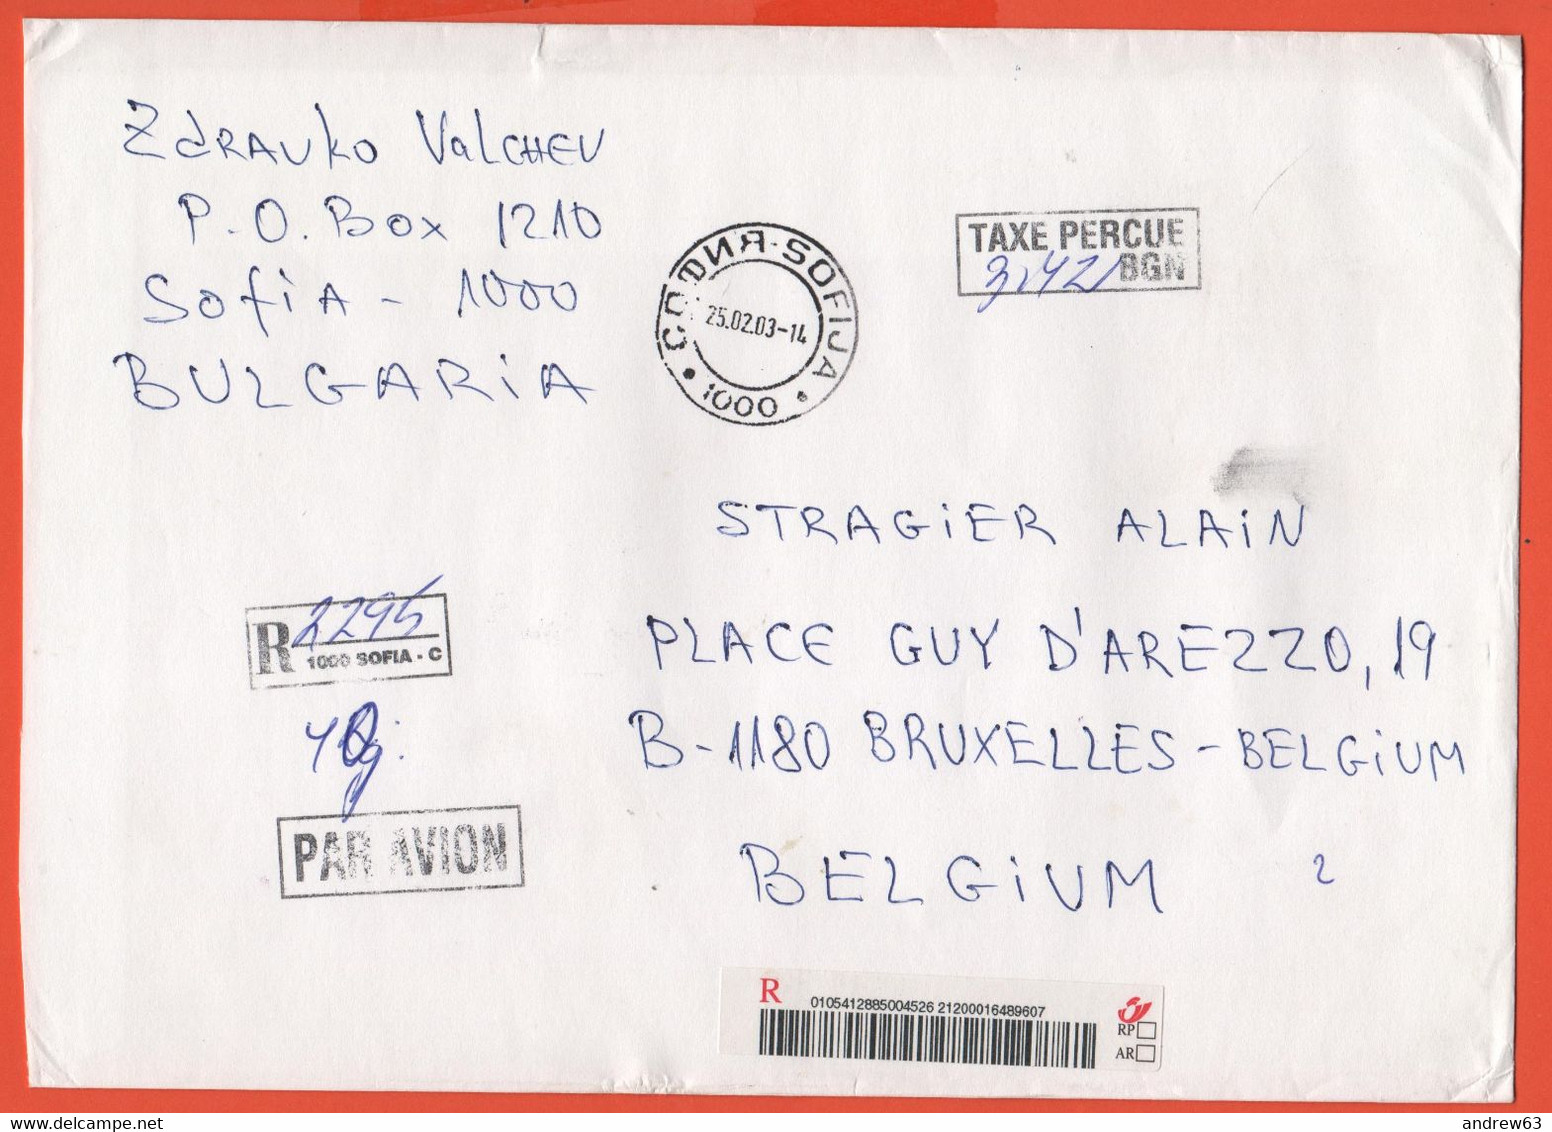 BULGARIA - BULGARIE - 2003 - 3,42 Postage Paid Taxe Percue - Registered - Par Avion - Medium Envelope - Viaggiata Da Sof - Covers & Documents